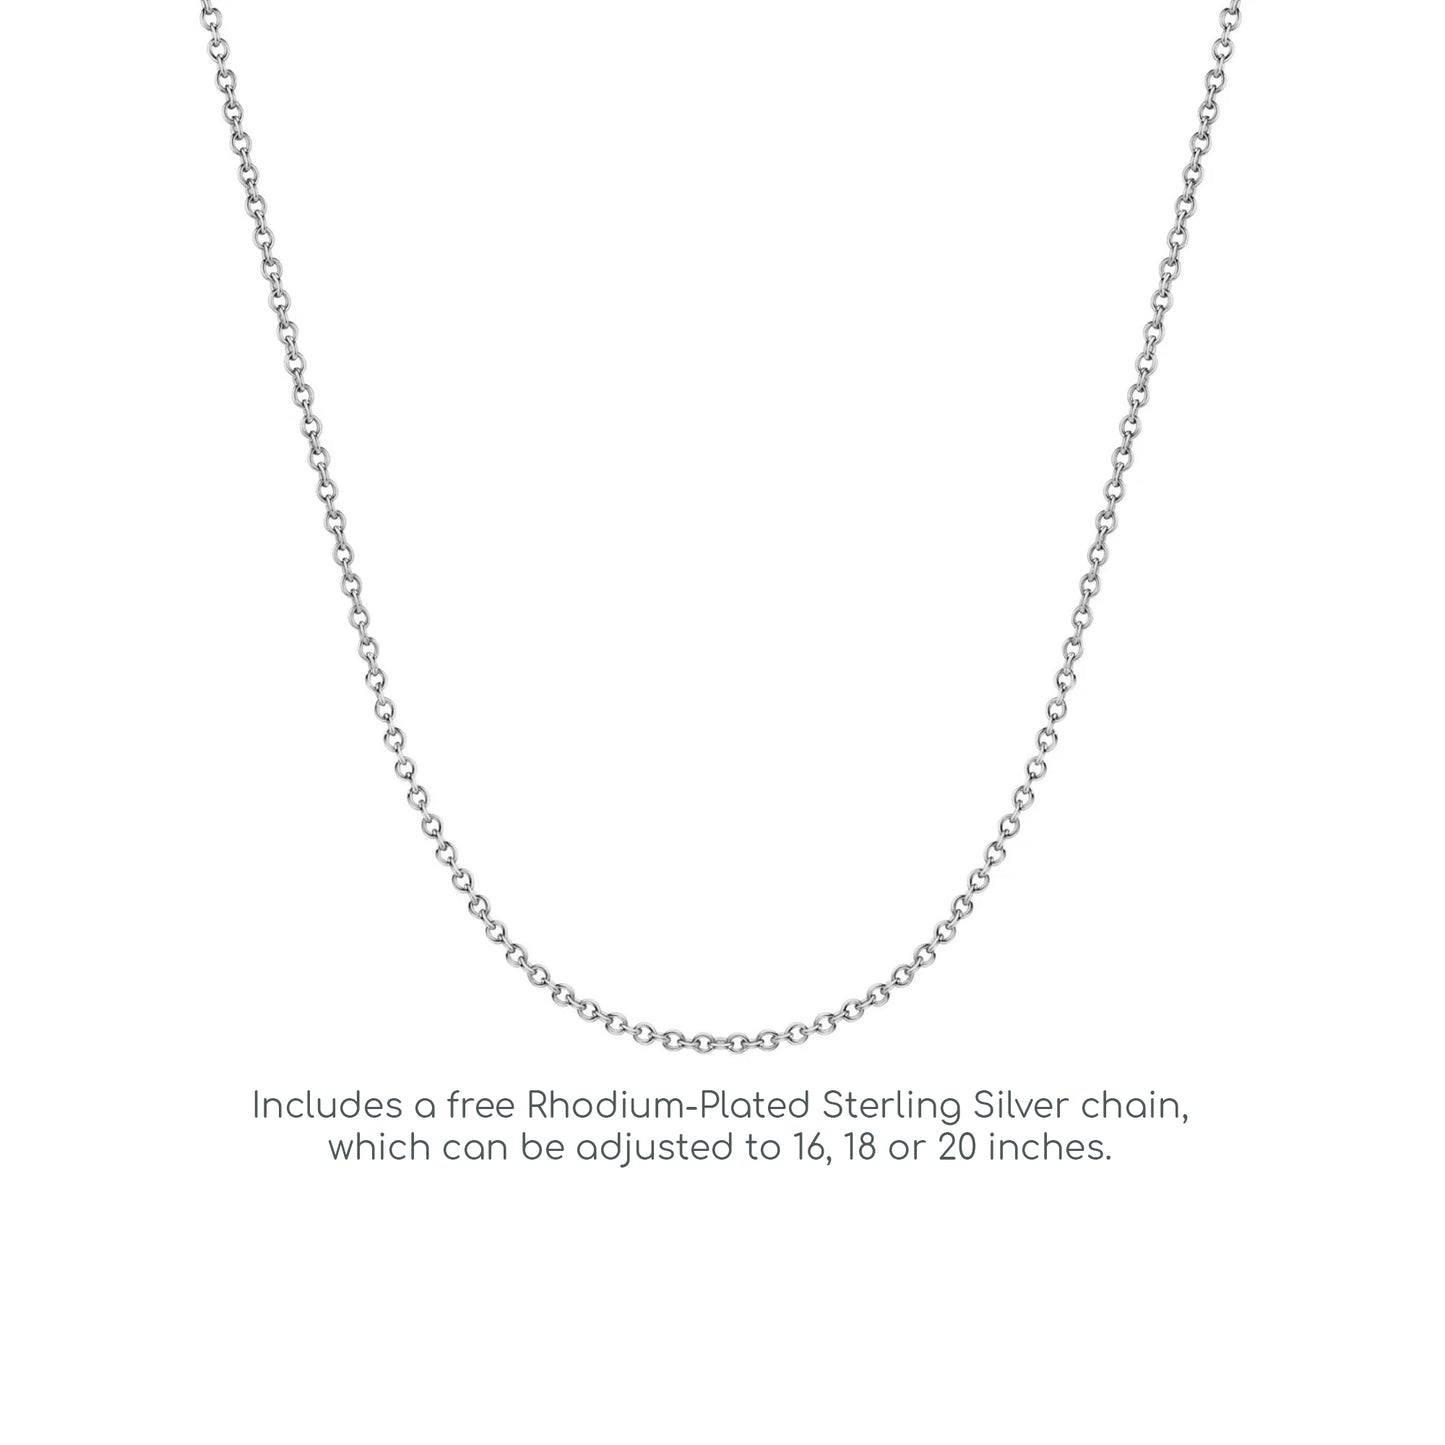 Unisex Silver  Polished Ankh Cross Pendant Necklace 18 inch - GVX048